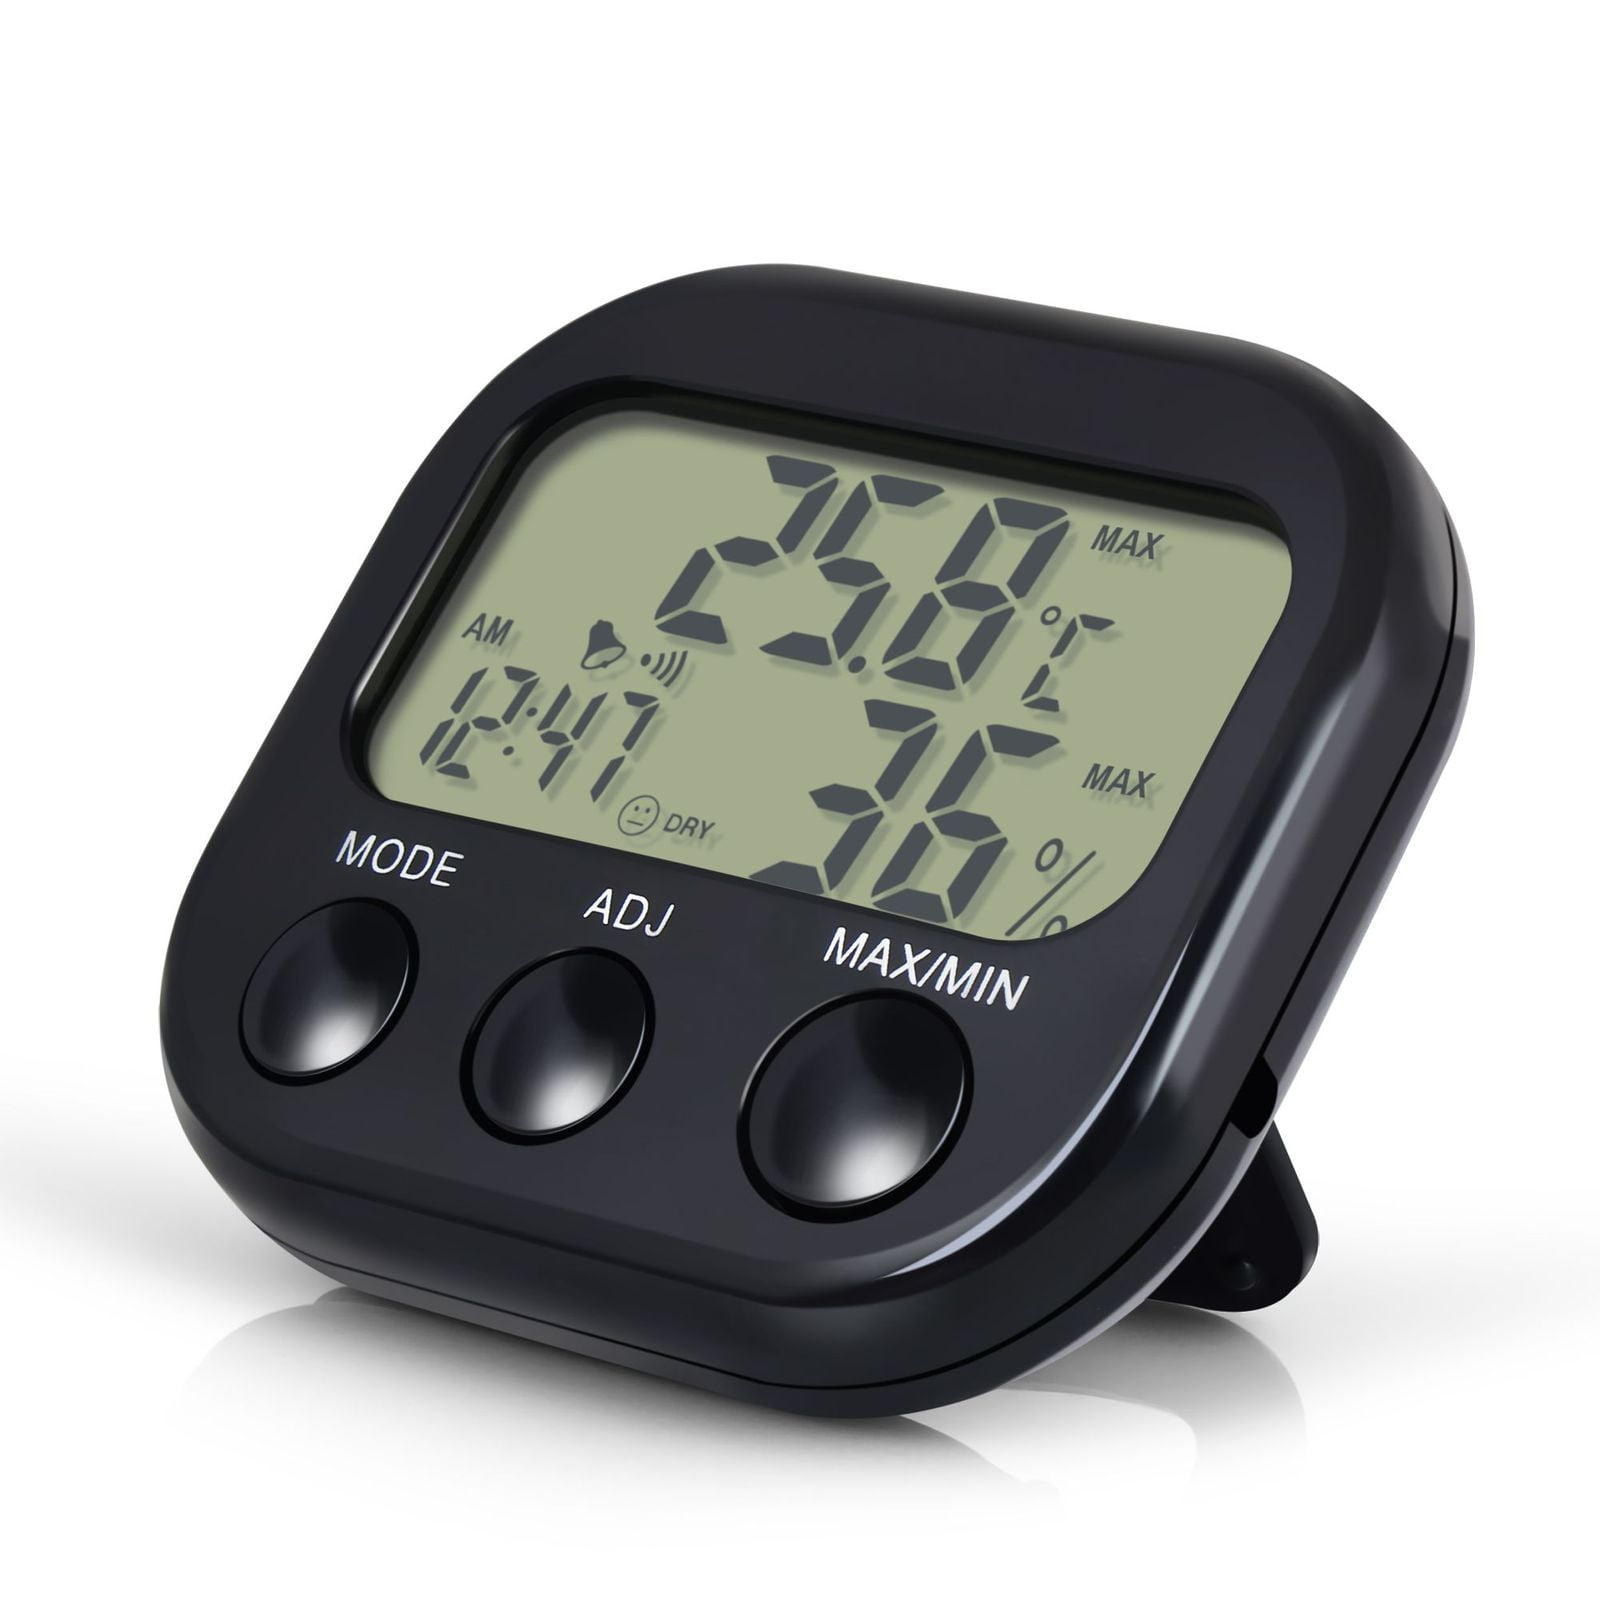 LCD Digital Temperature Humidity Meter Thermometer Hygrometer Indoor Black